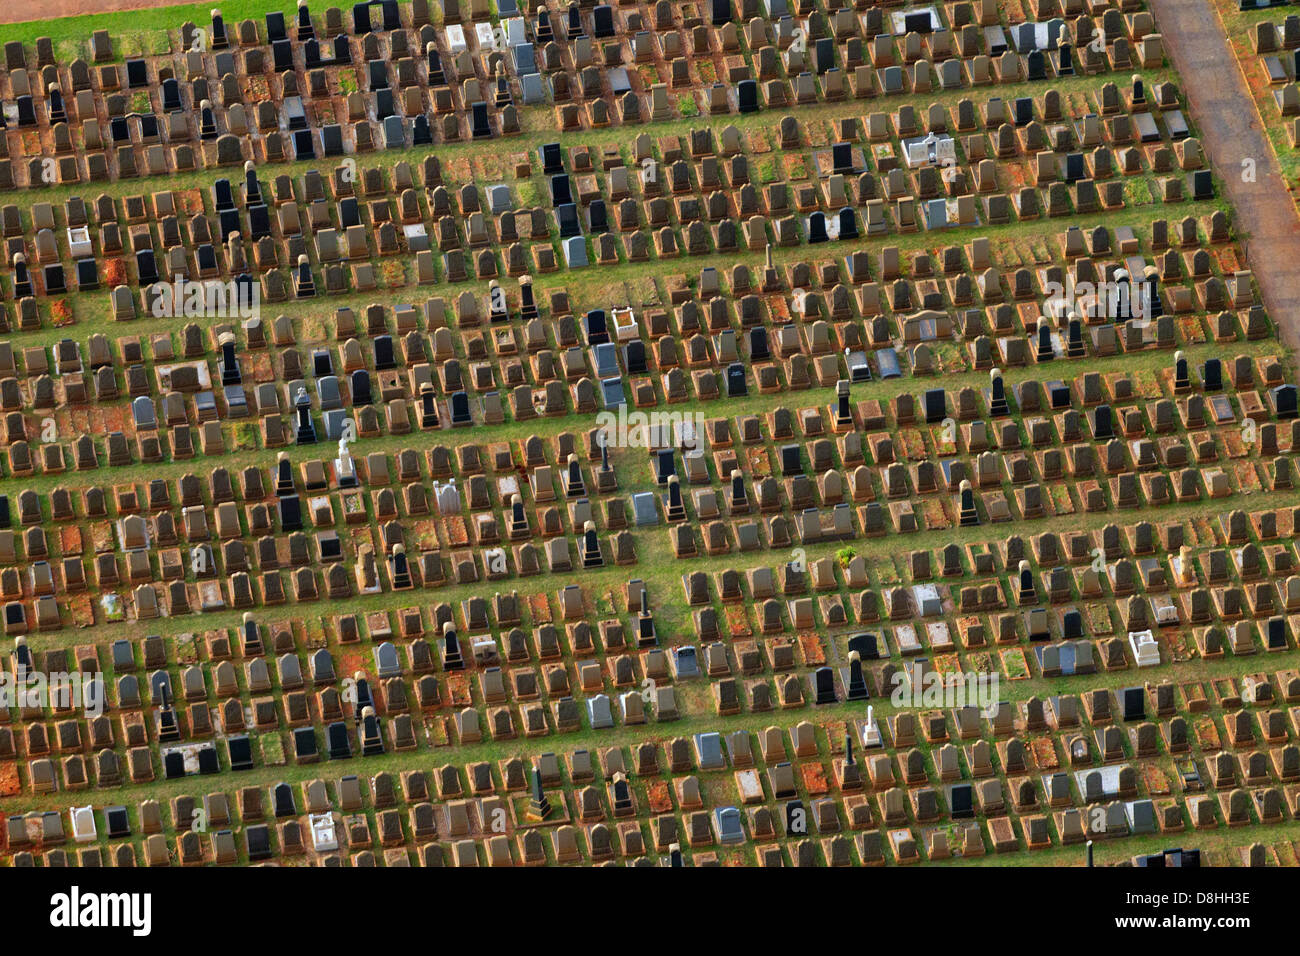 Vista aérea de un cementerio y lápidas.Johannesburgo, Sudáfrica Foto de stock